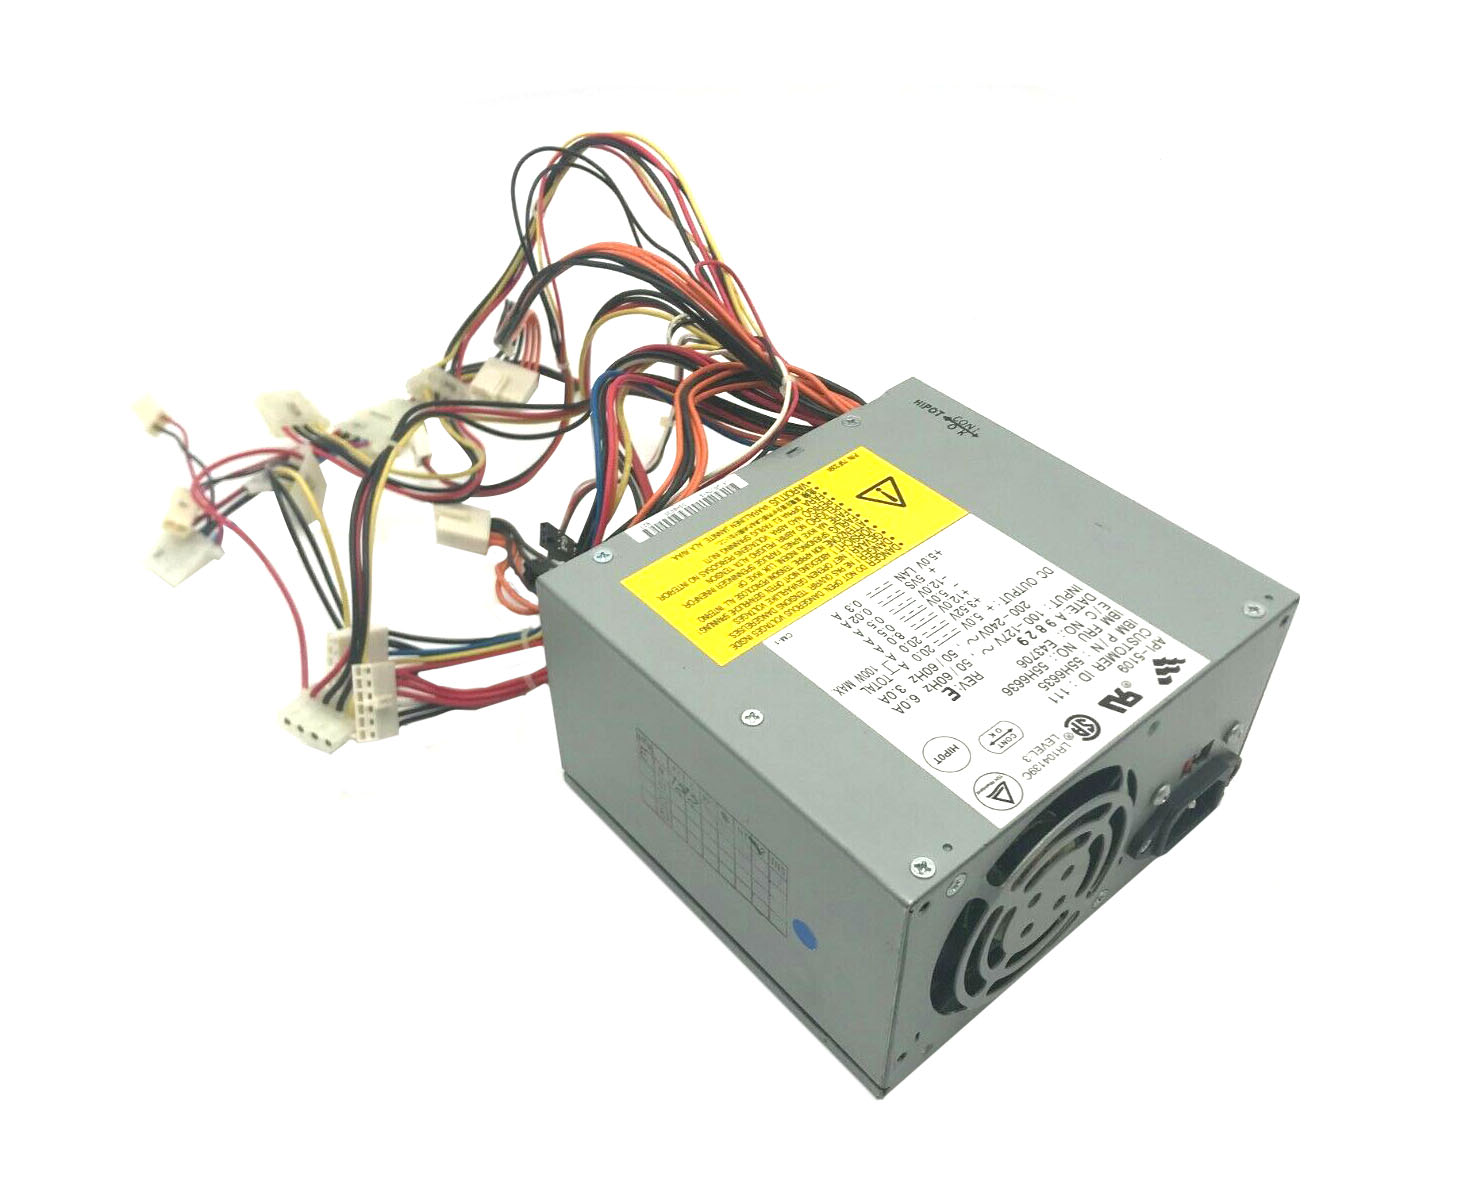 IBM 55H6636 225-Watts Redundant Power Supply for PC 340